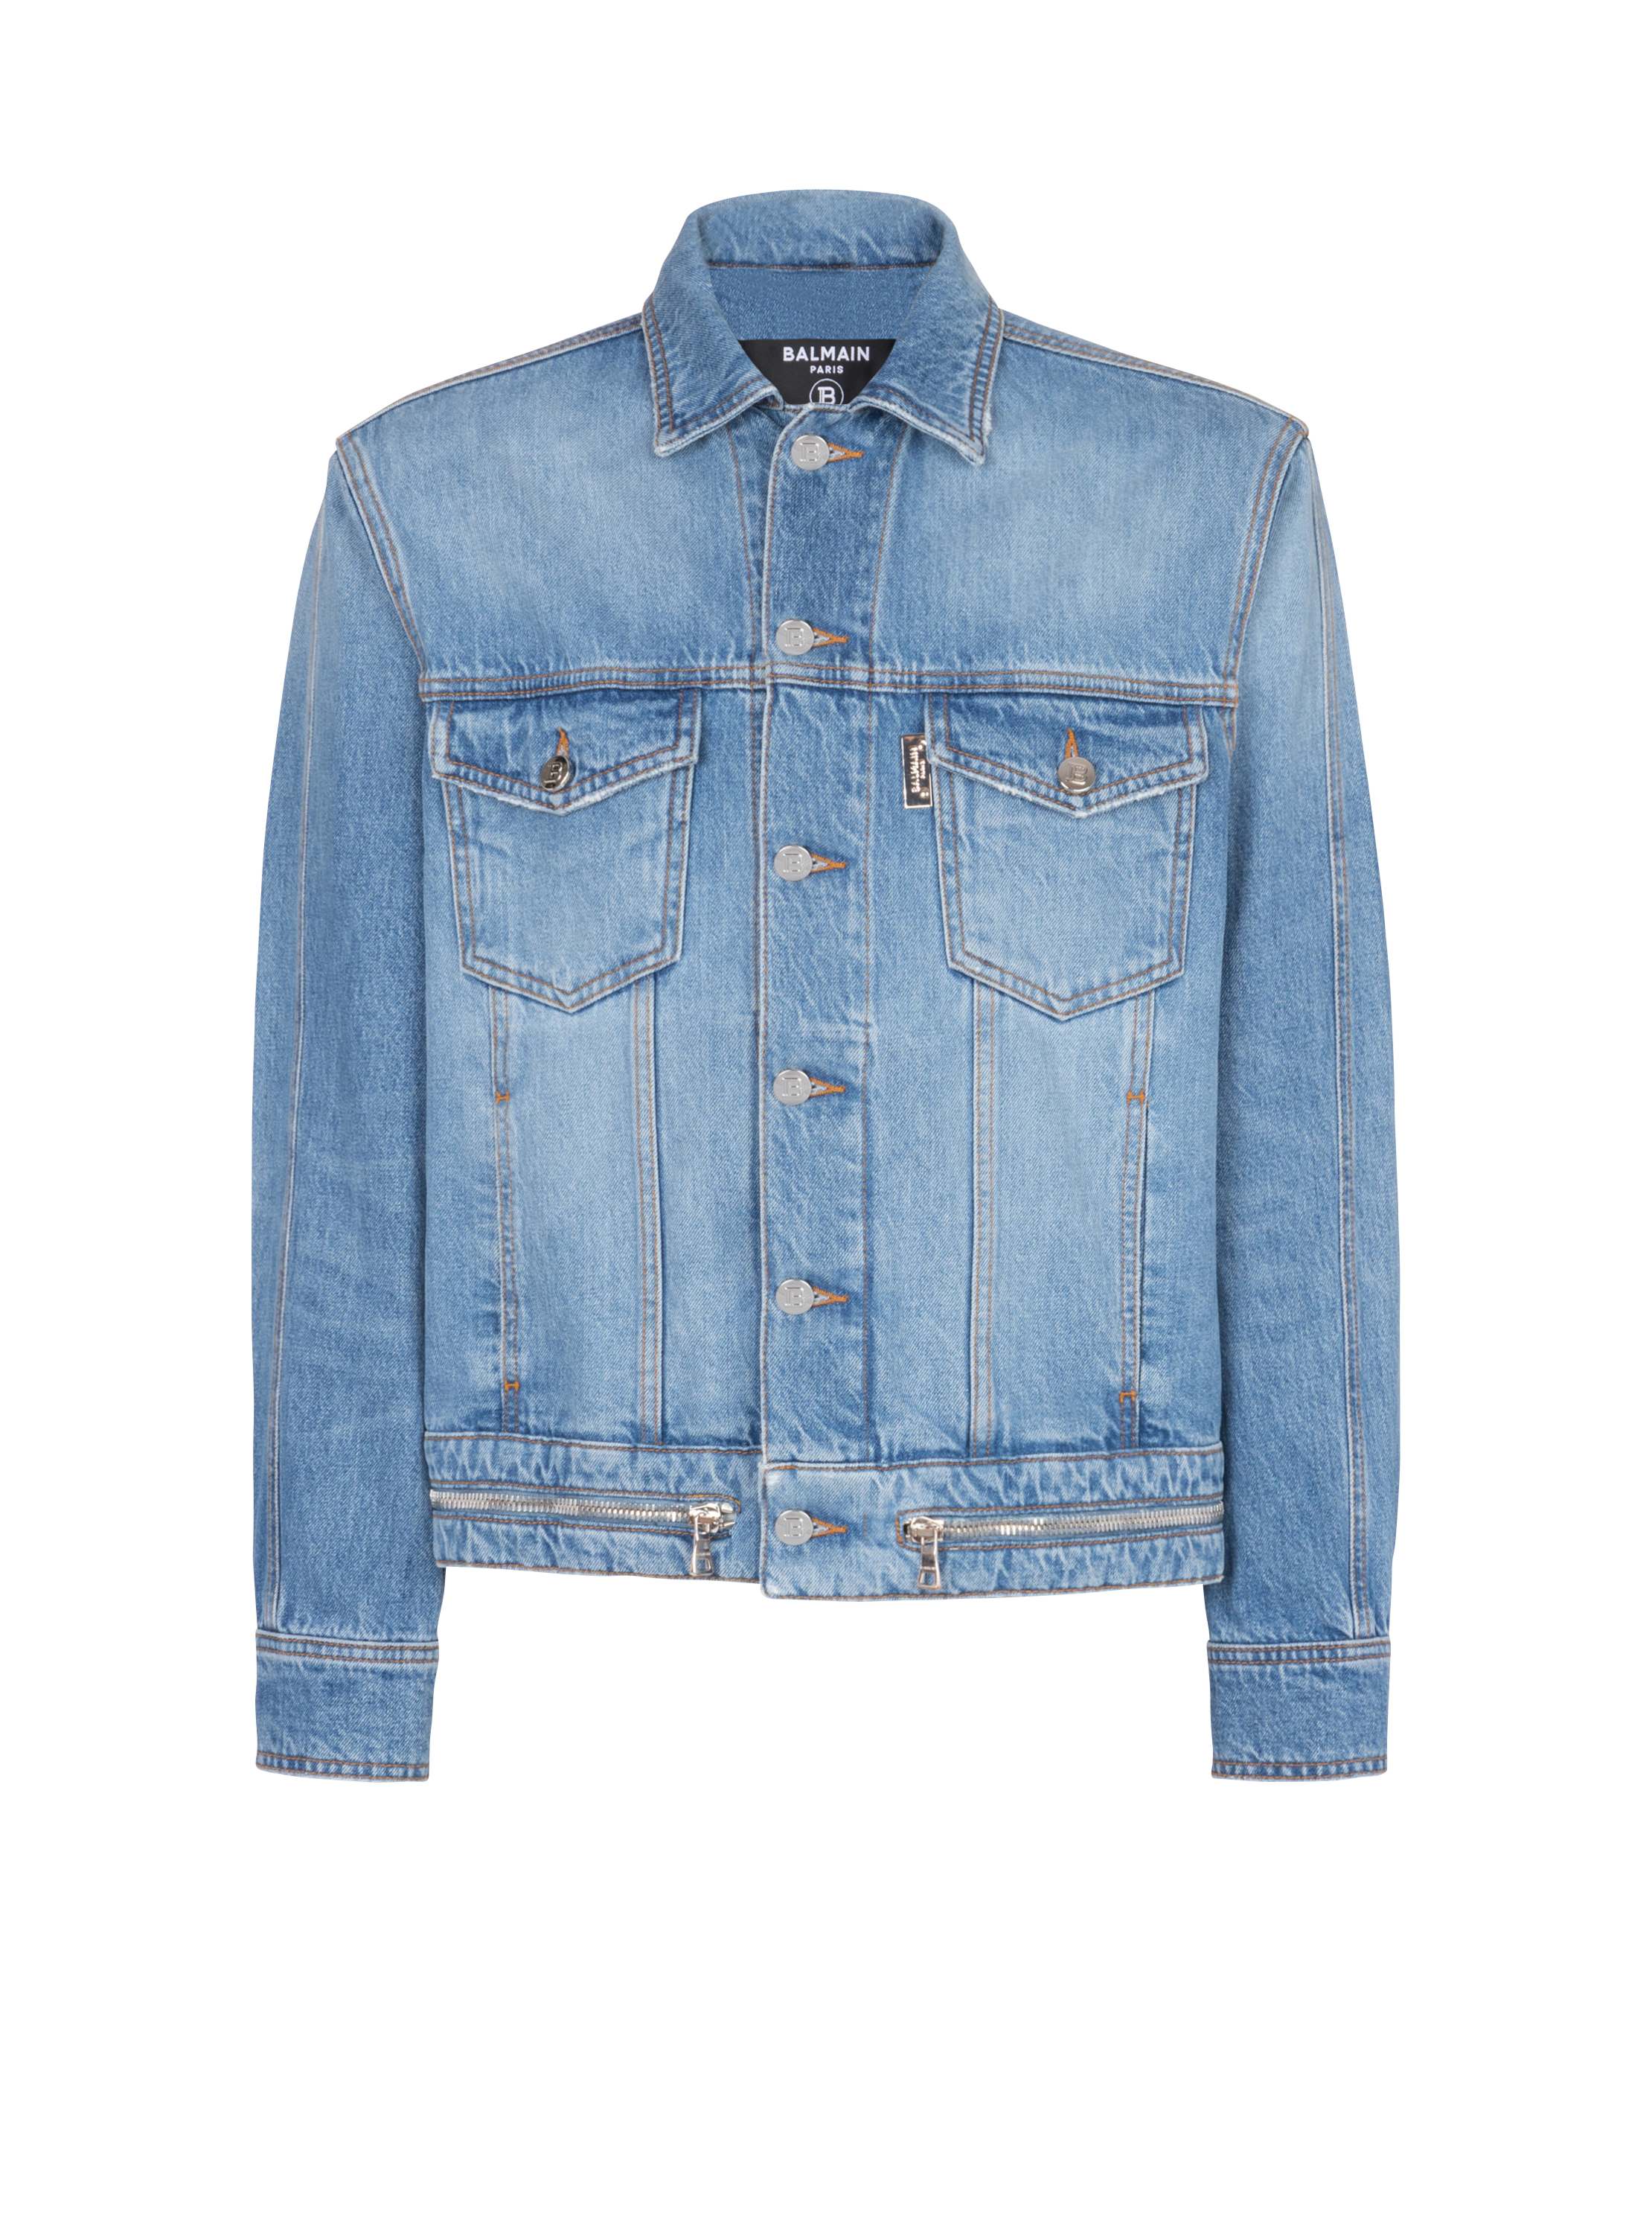 Denim jacket with zip fastening, blue, hi-res